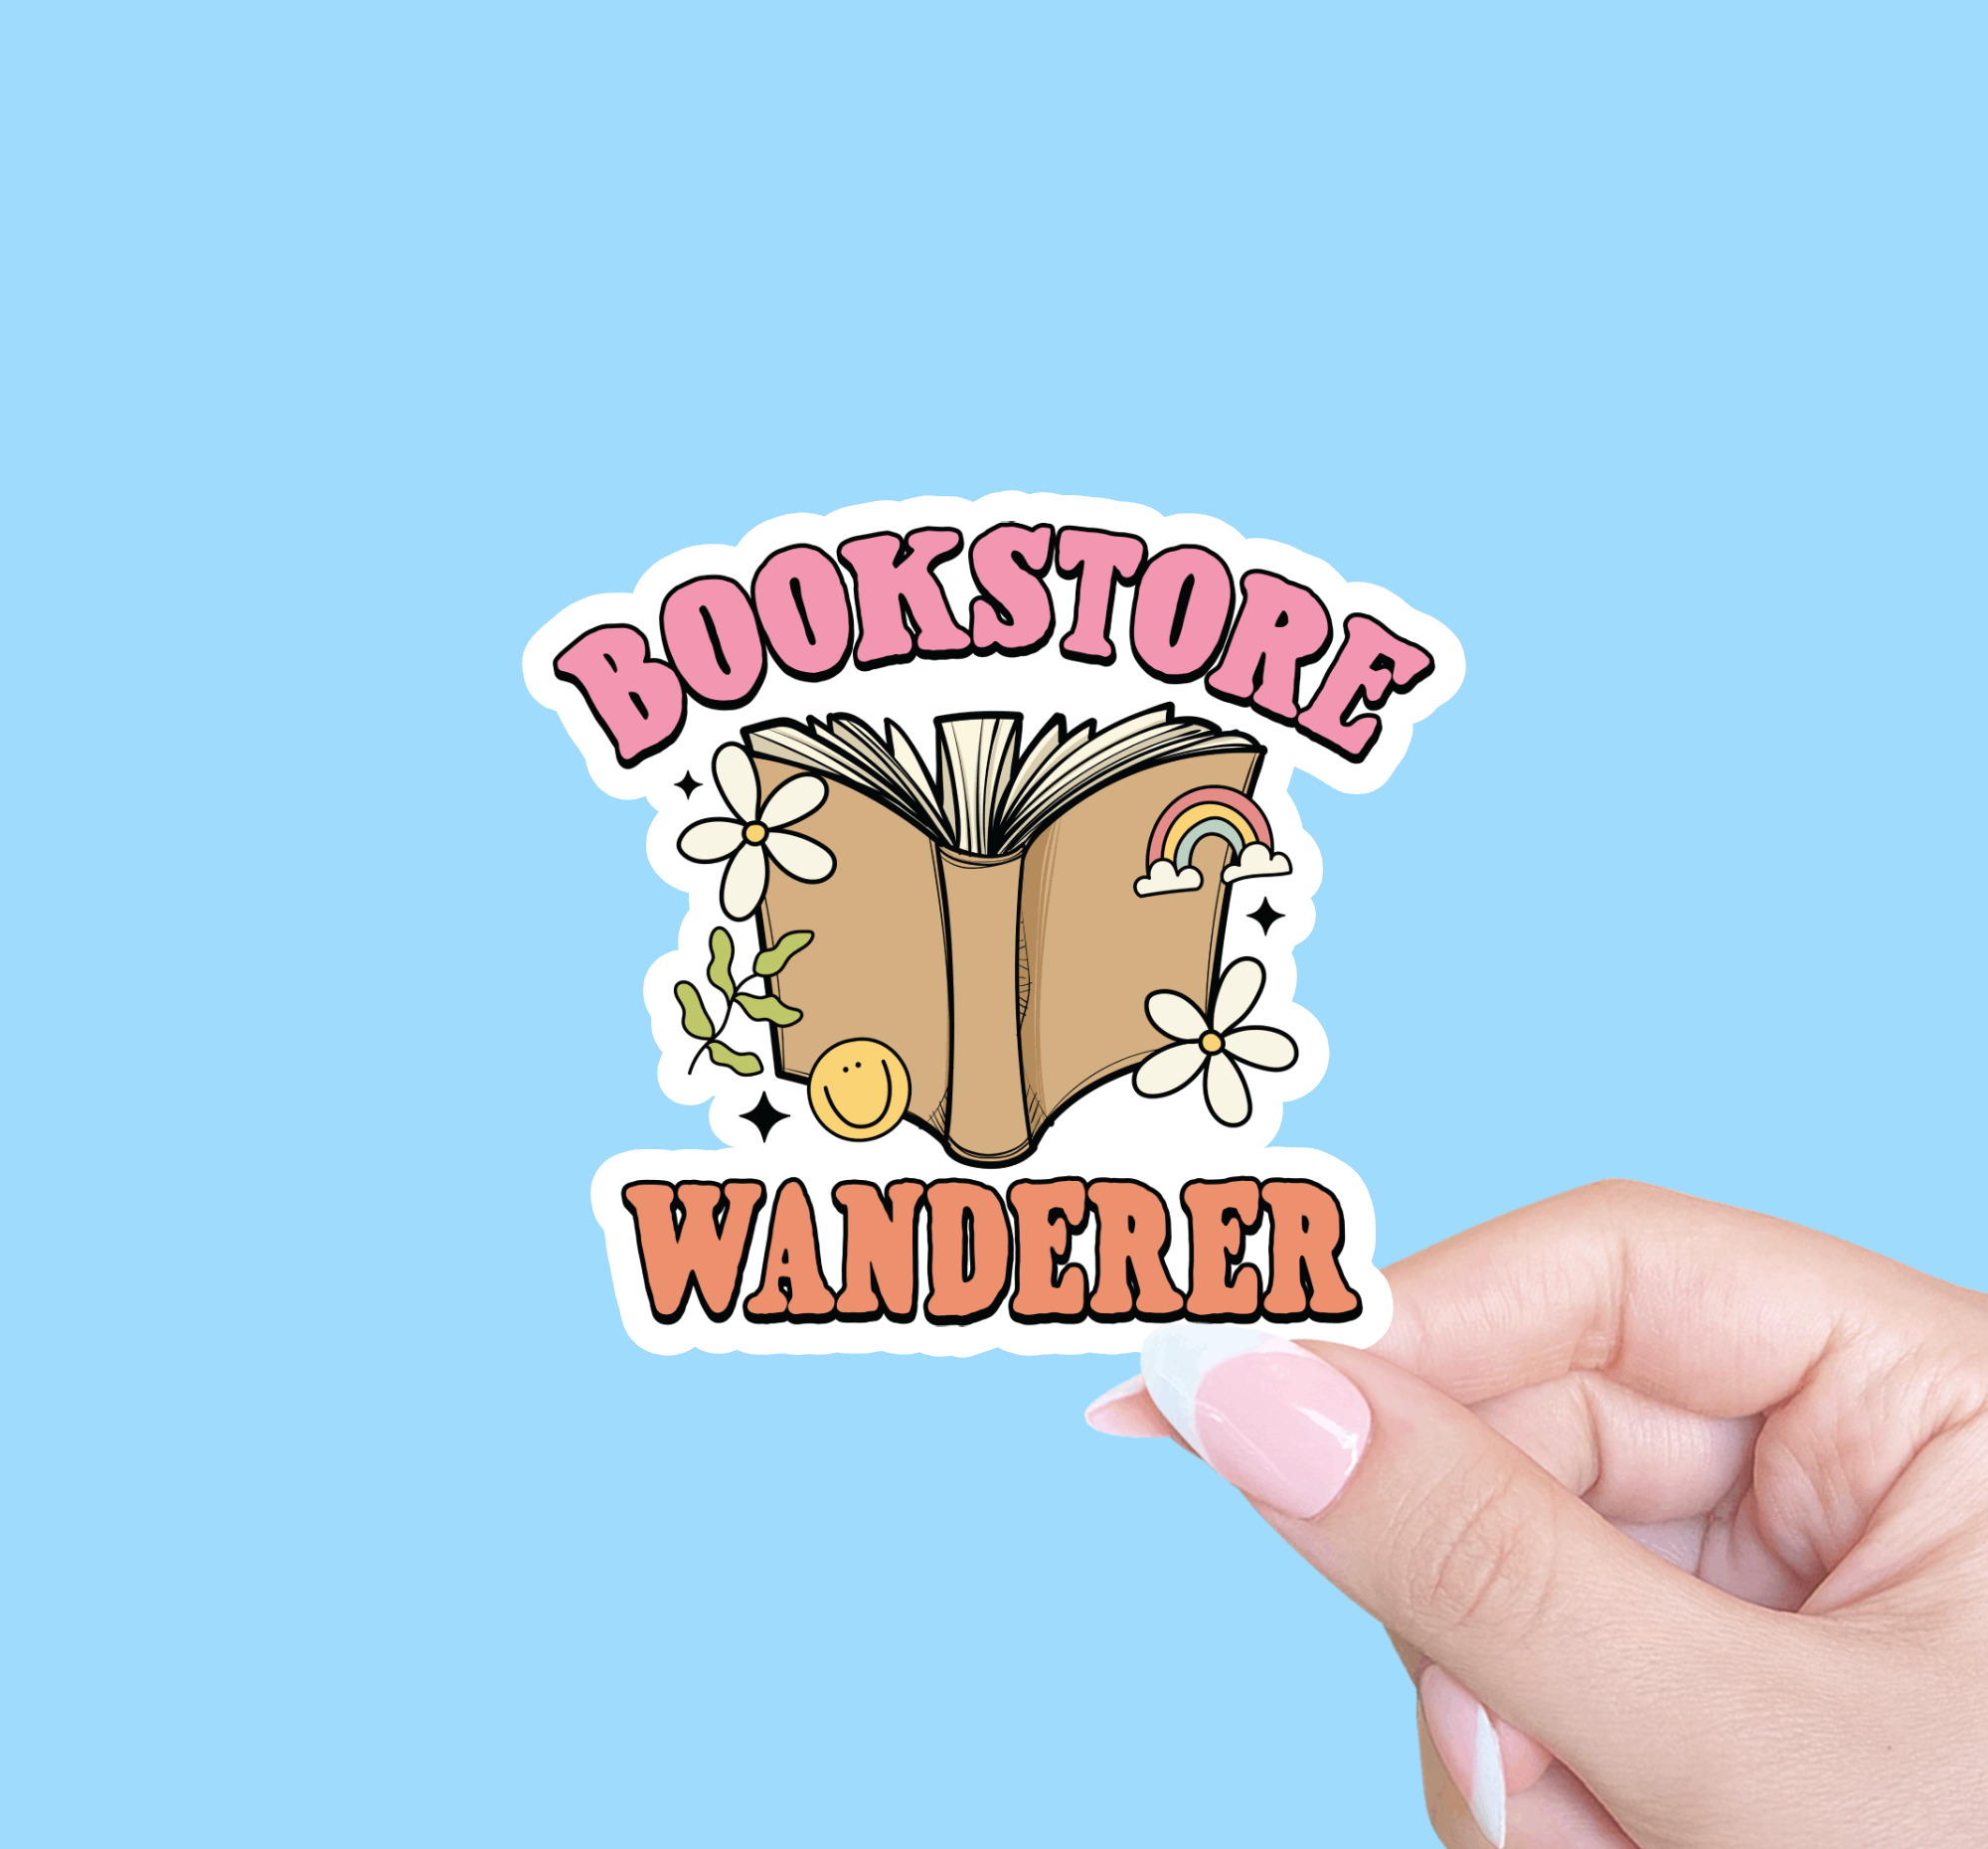 Bookstore Wanderer